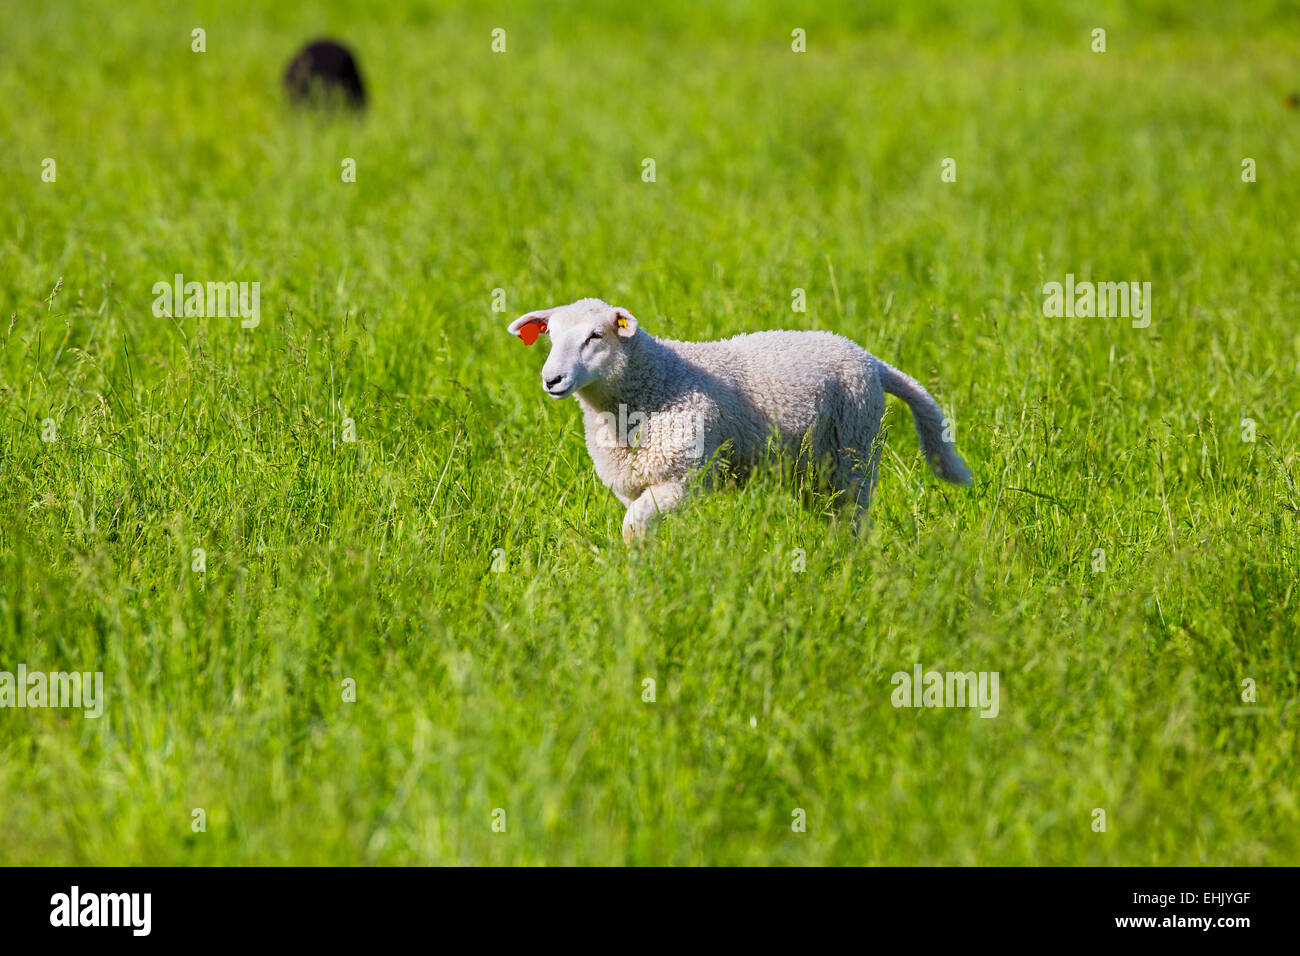 Un lindo cordero / oveja joven camina en un campo verde. Foto de stock